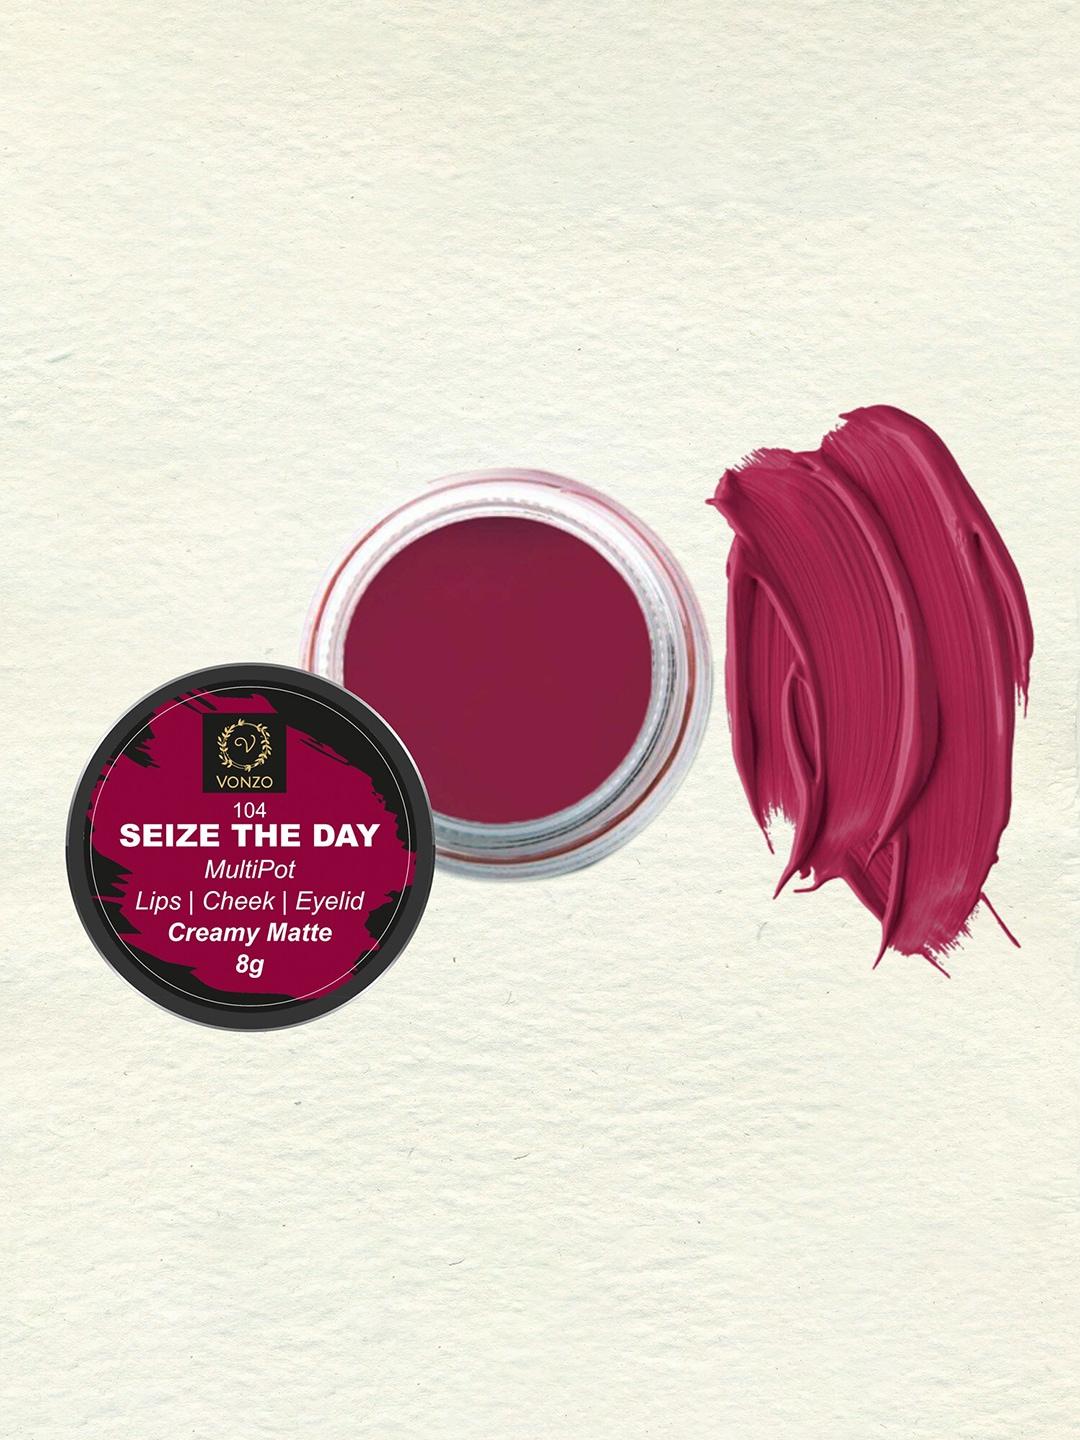 VONZO Creamy Matte MultiPot Lip & Cheek Tint With Essential Oils 8g - Seize The Day